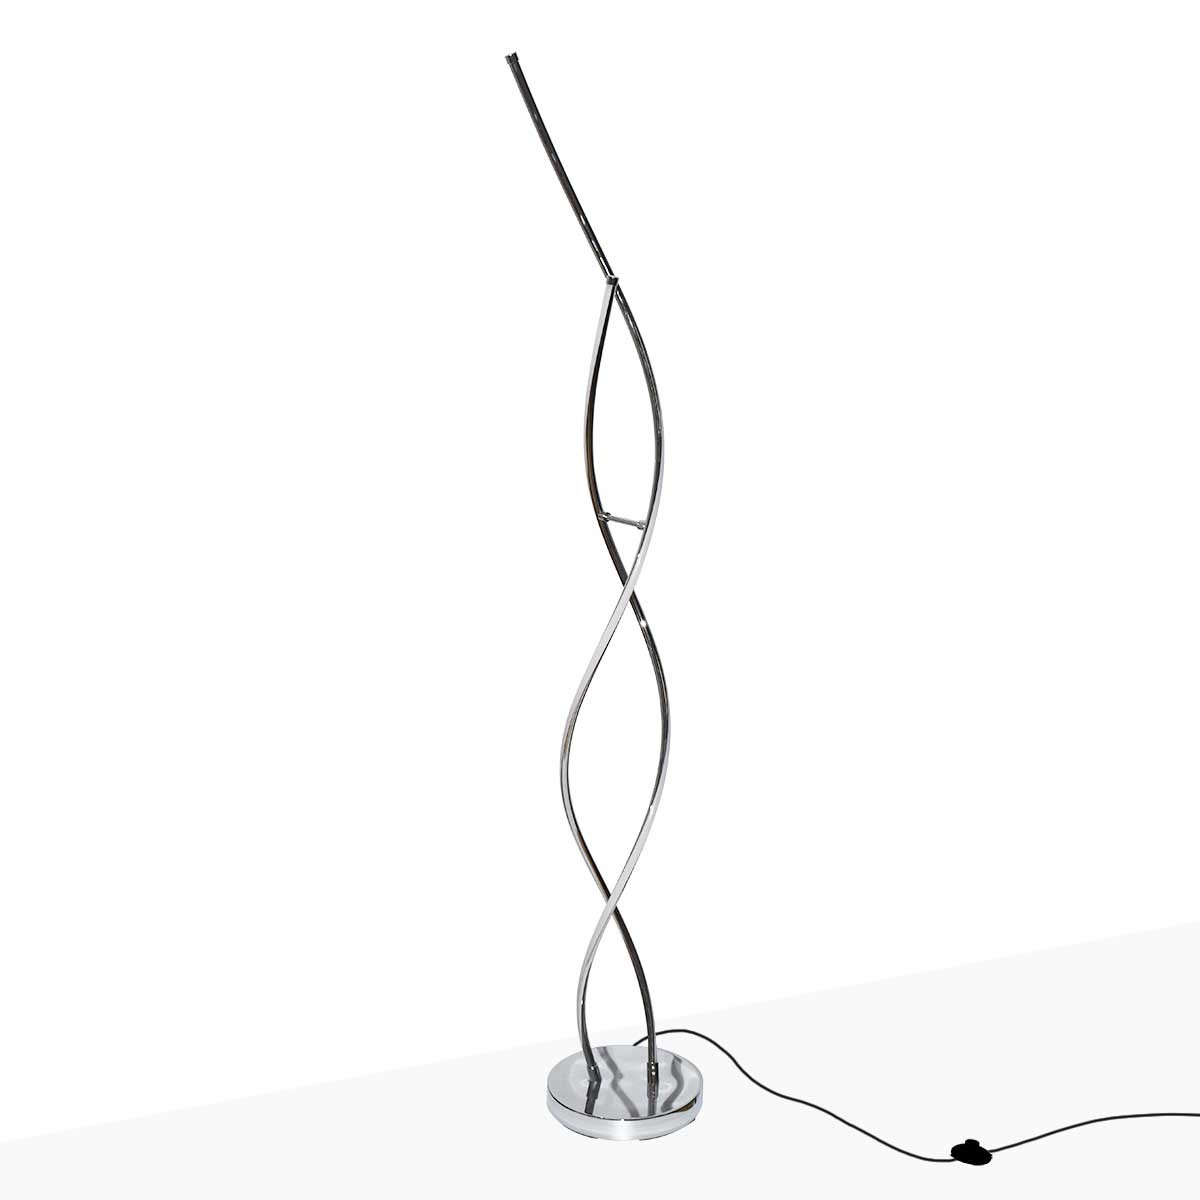 Gángster Incorrecto Inclinarse Comprar lámpara de pie Helix de diseño espiral con LED integrado